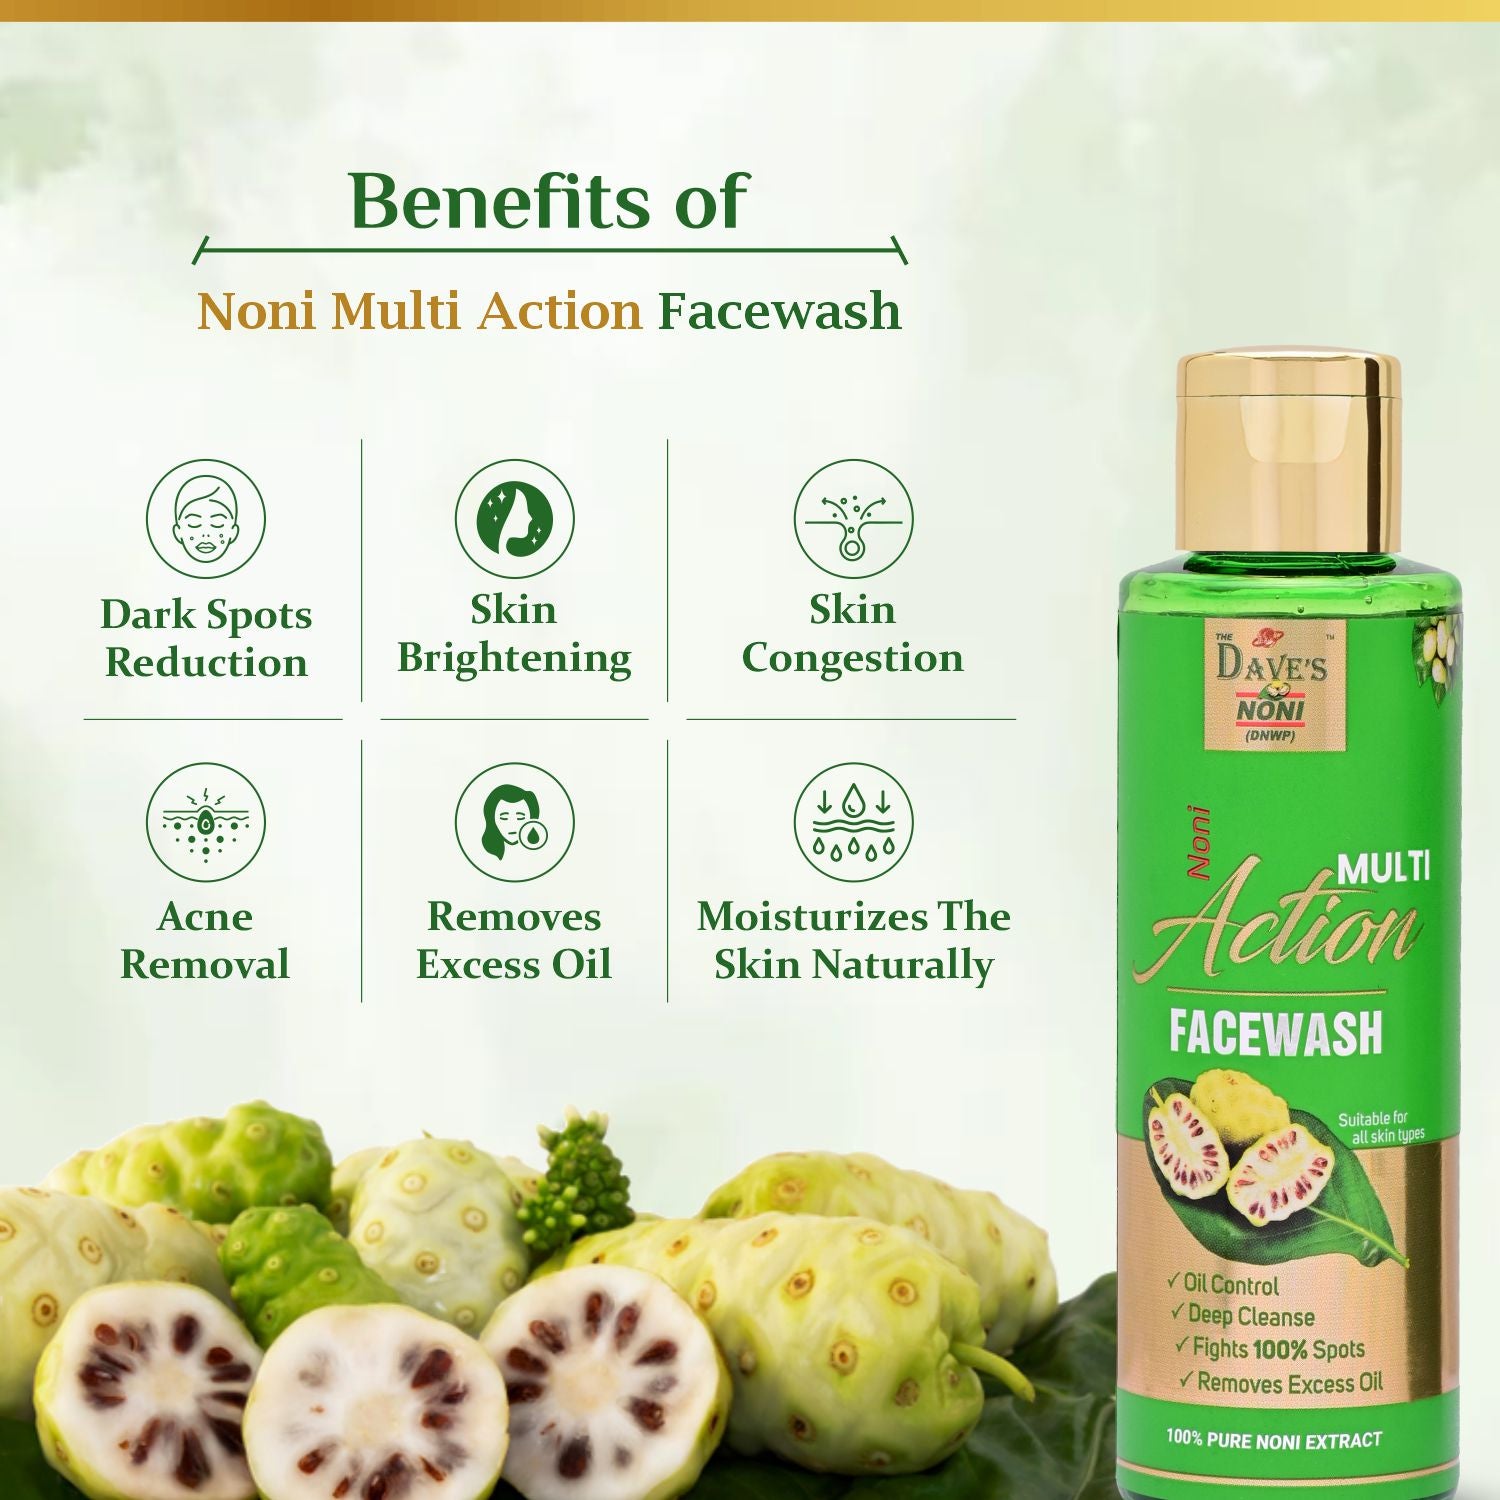 Noni Multi Action Face Wash Benefits